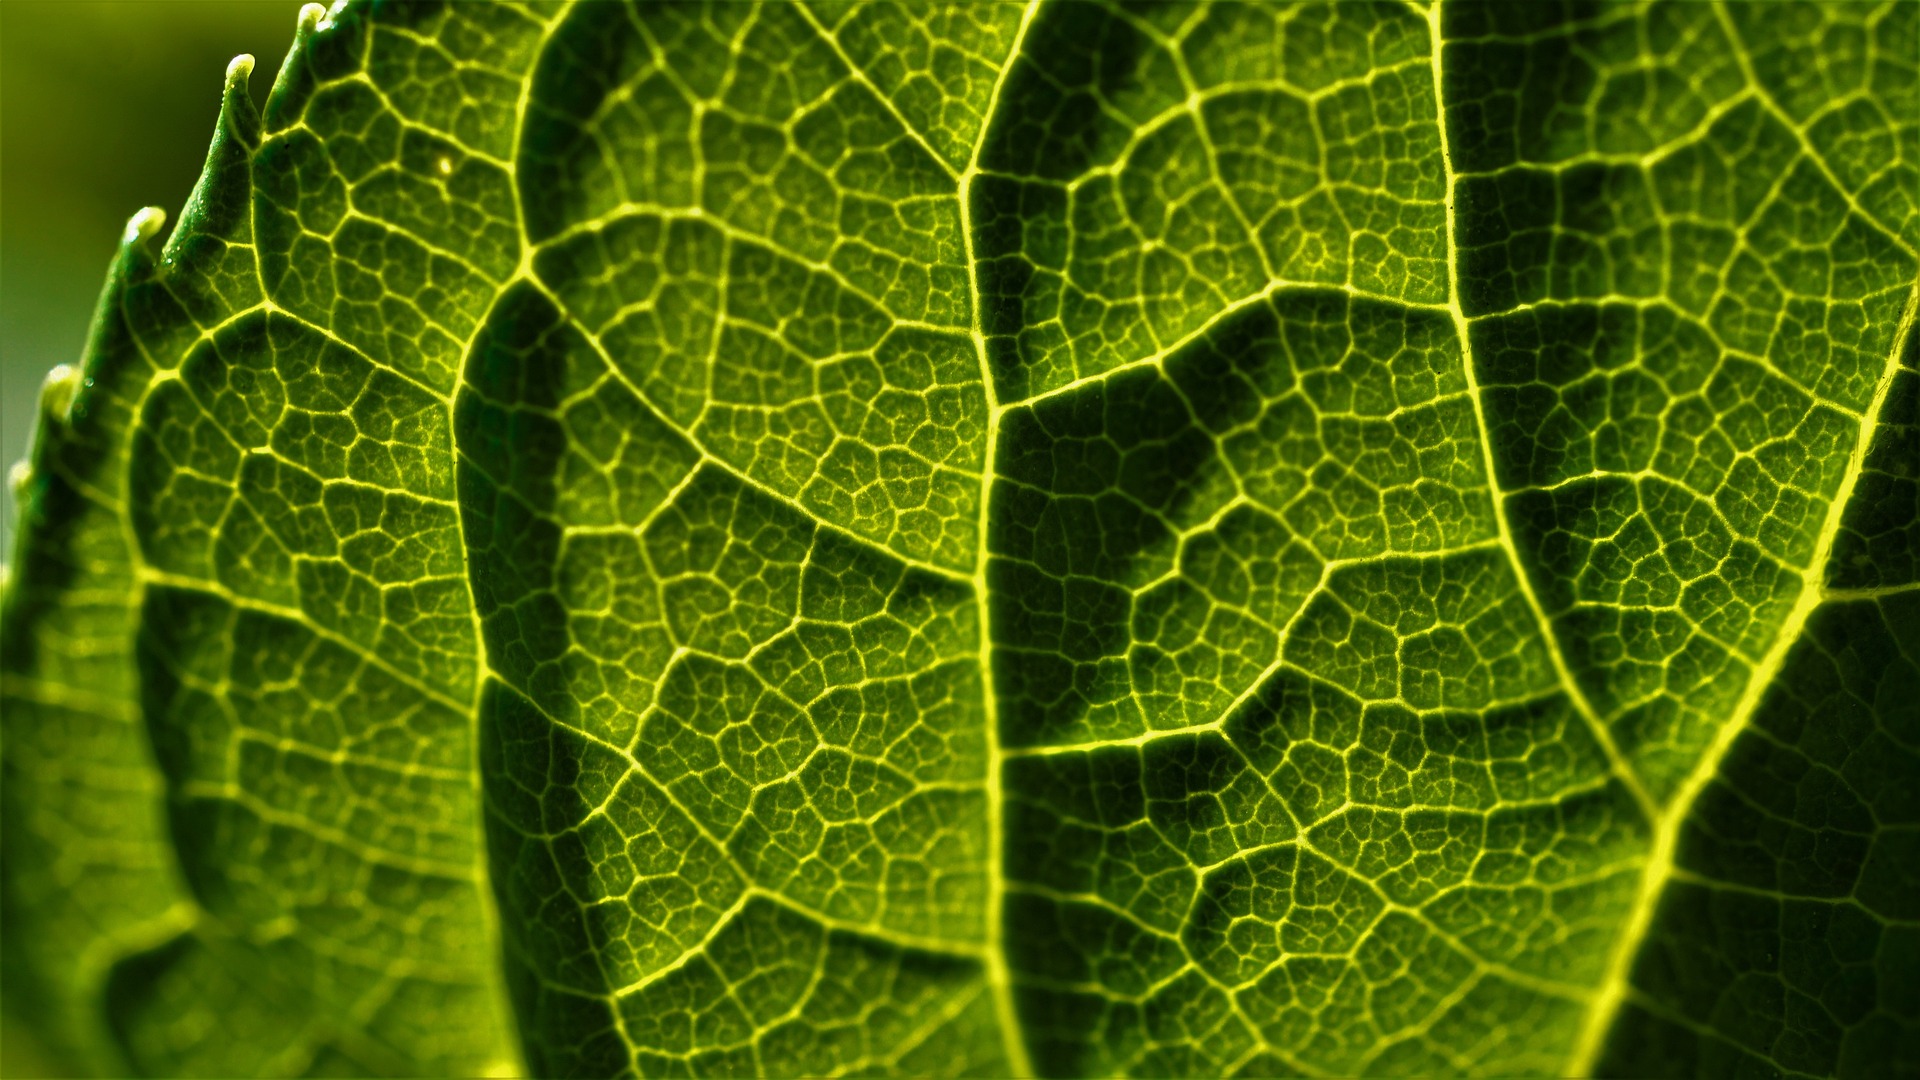 Zoomed in image of leaf